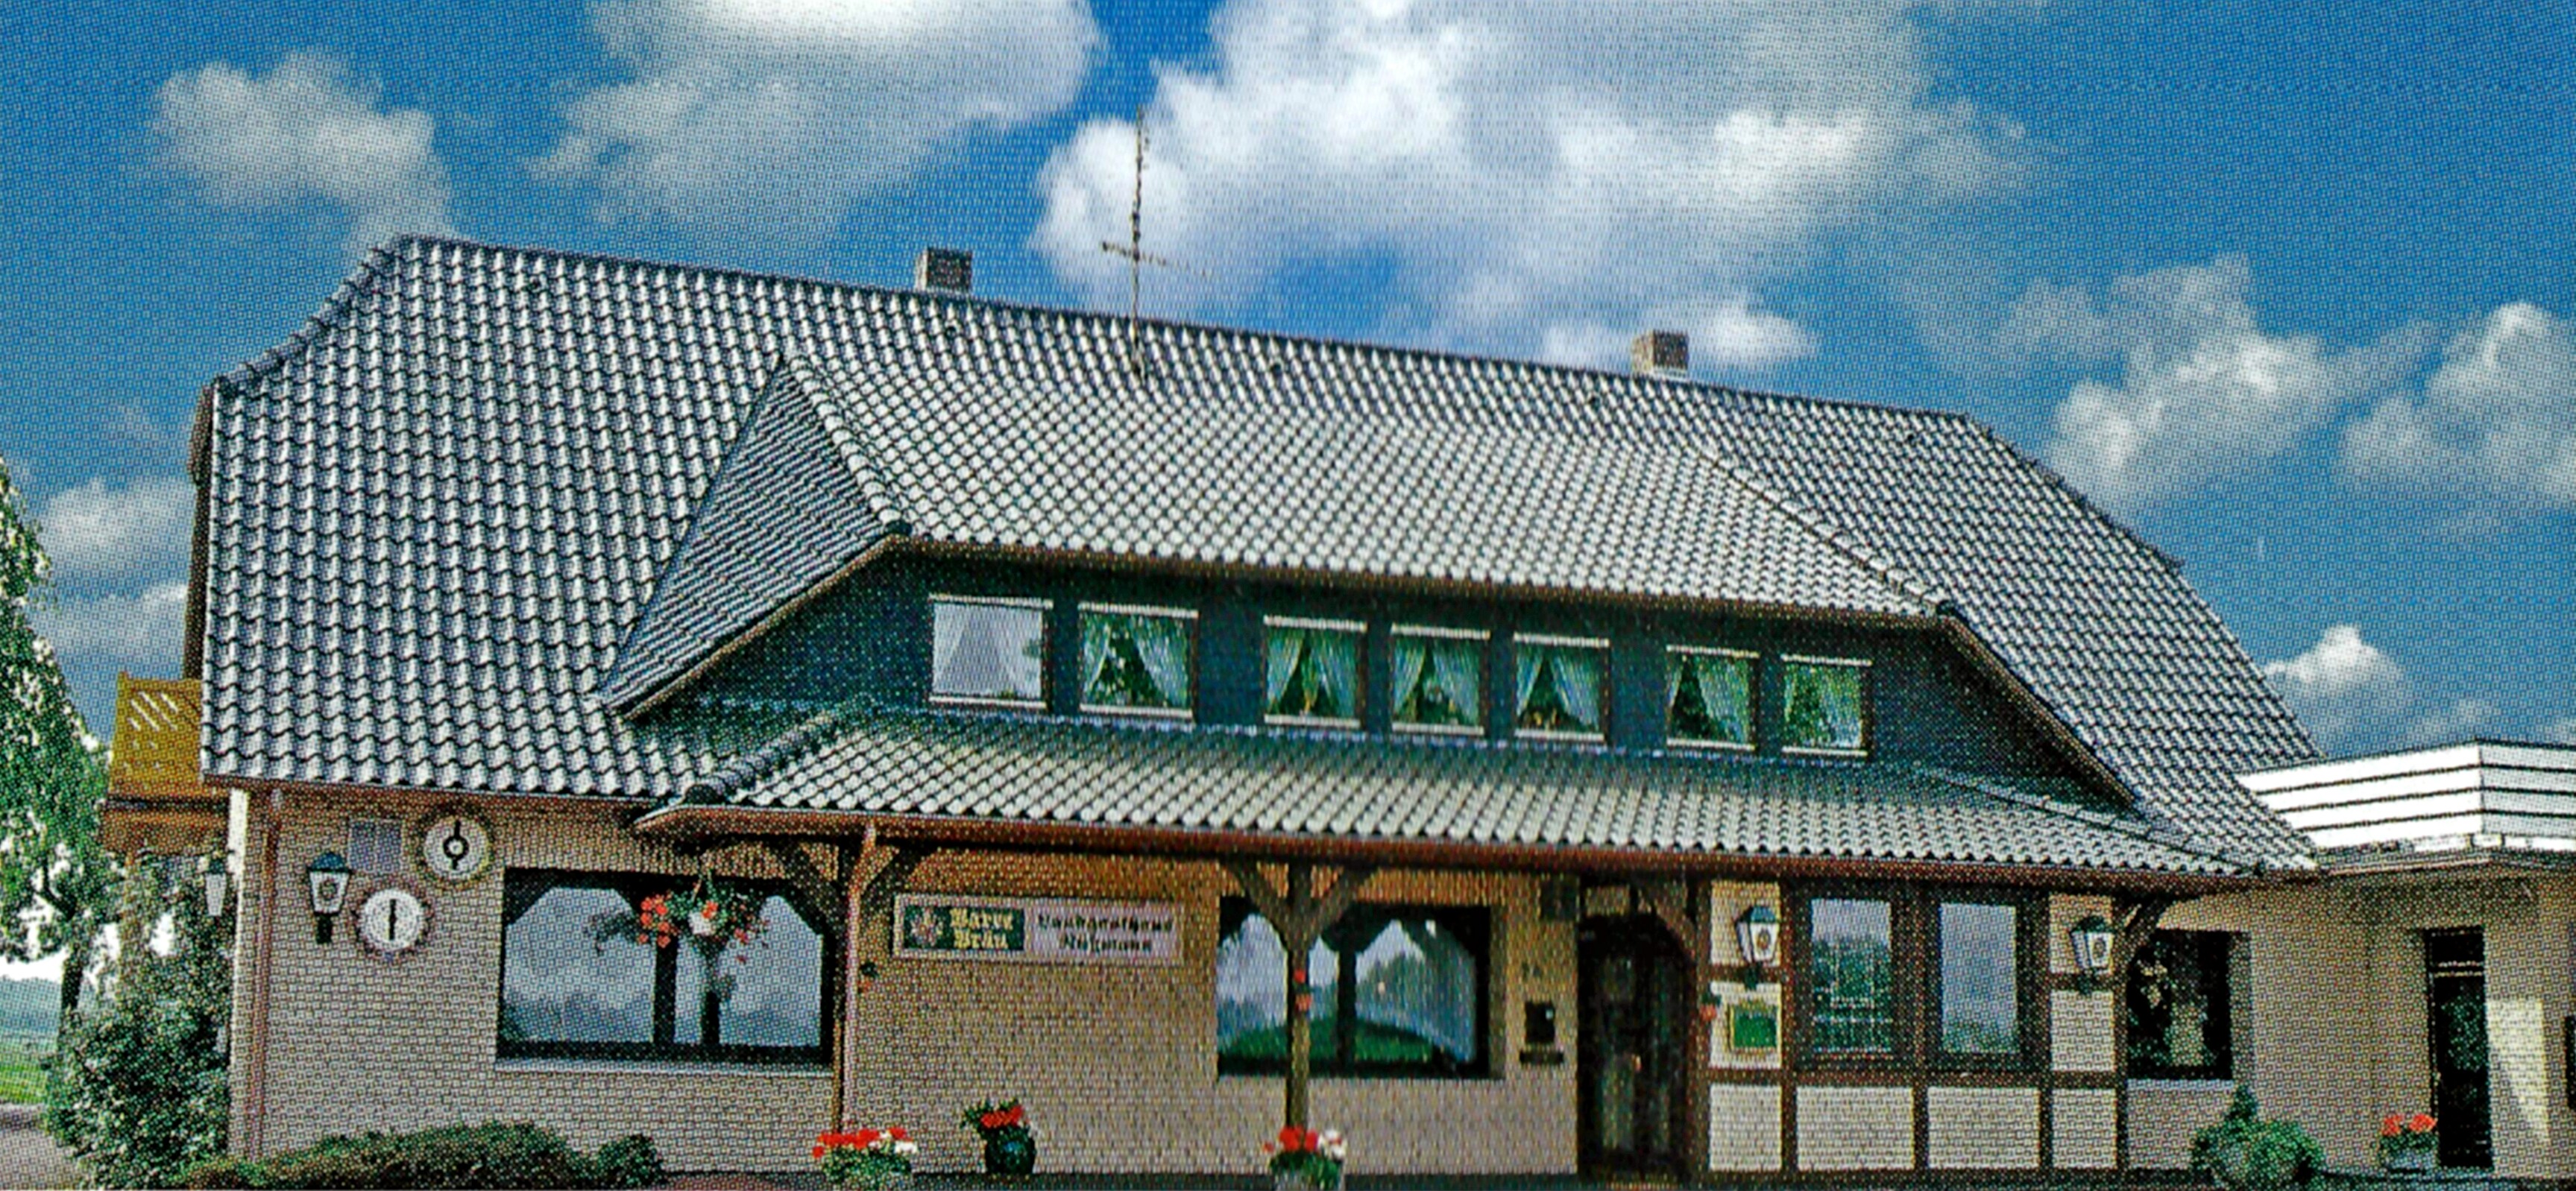 Landgasthaus Nüßmann in der Samtgemeinde Rehden - Gem. Hemsloh - OT Hemsloher-Düversbruch (Kreismuseum Syke CC BY-NC-SA)